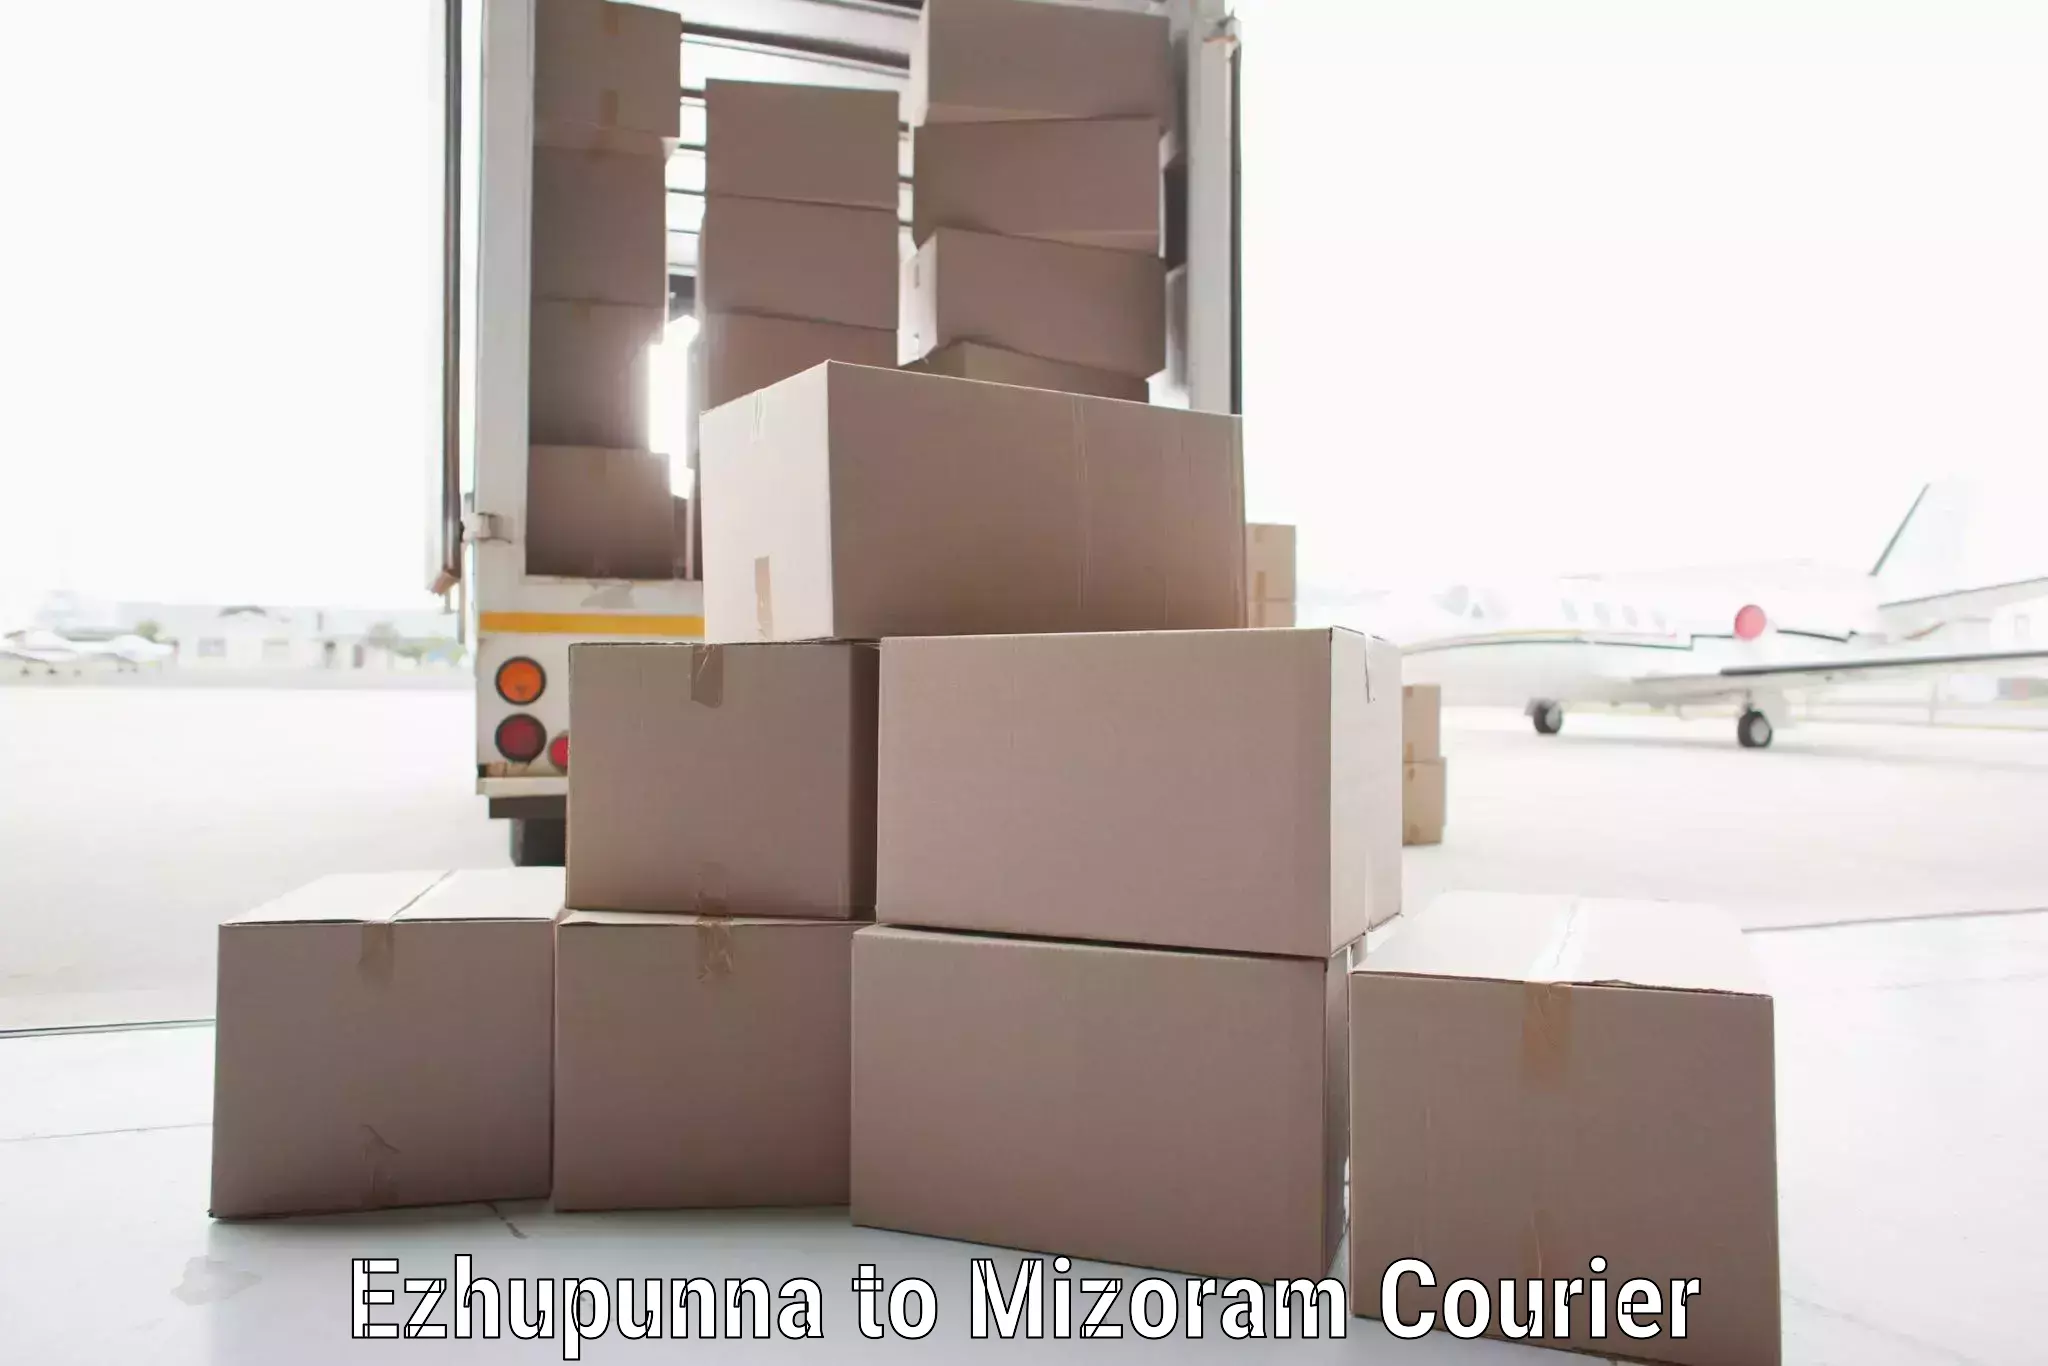 Business delivery service Ezhupunna to Mizoram